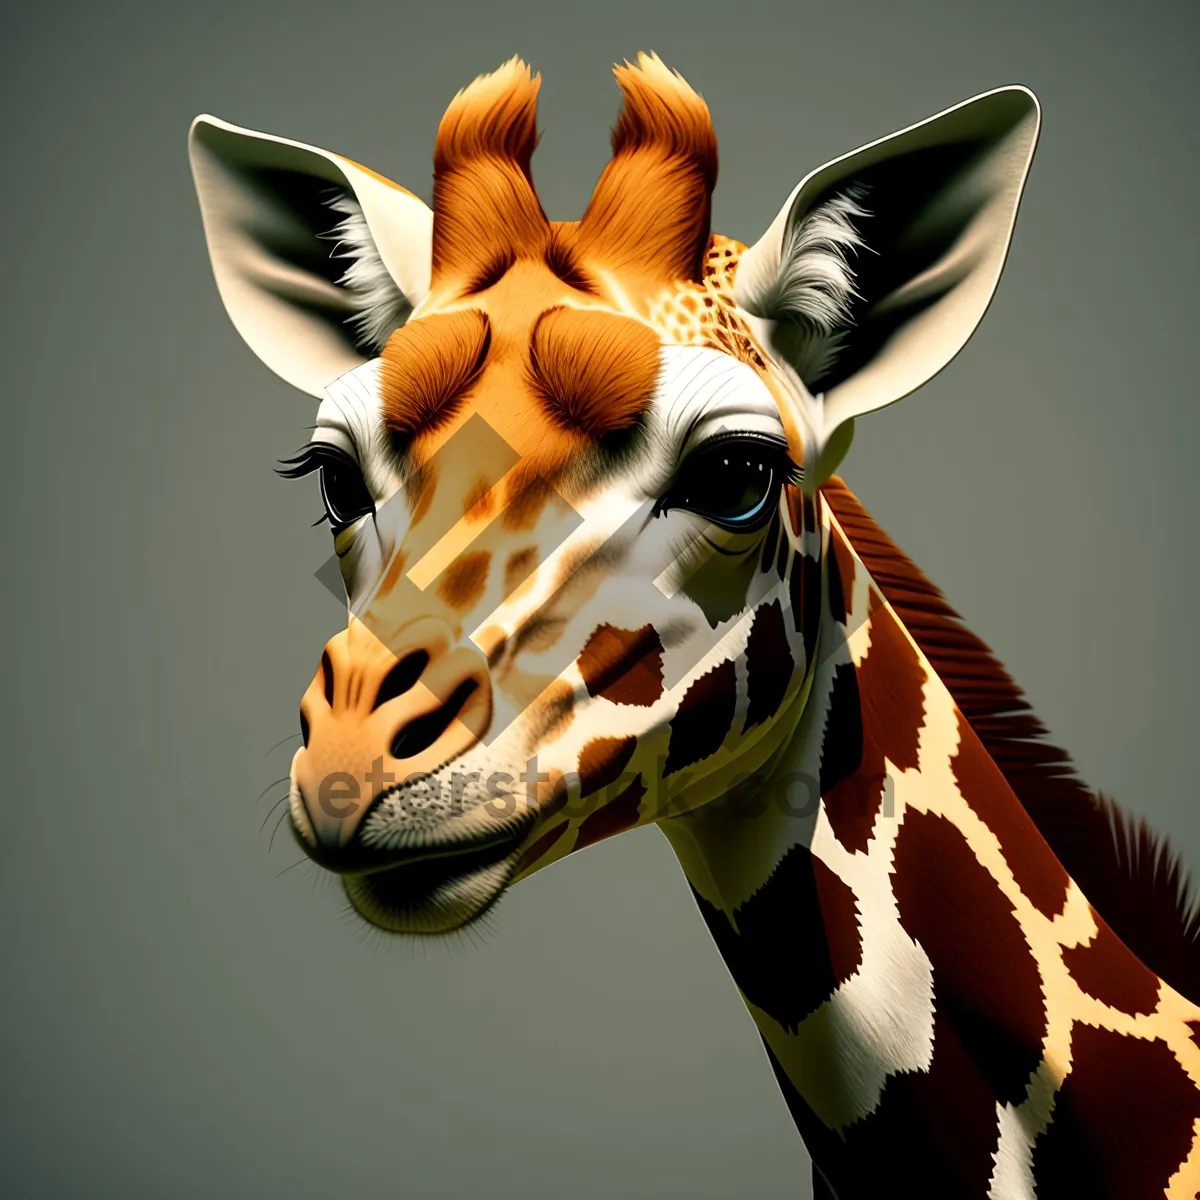 Picture of Majestic Gentleness: Giraffe Head in Natural Safari Habitat